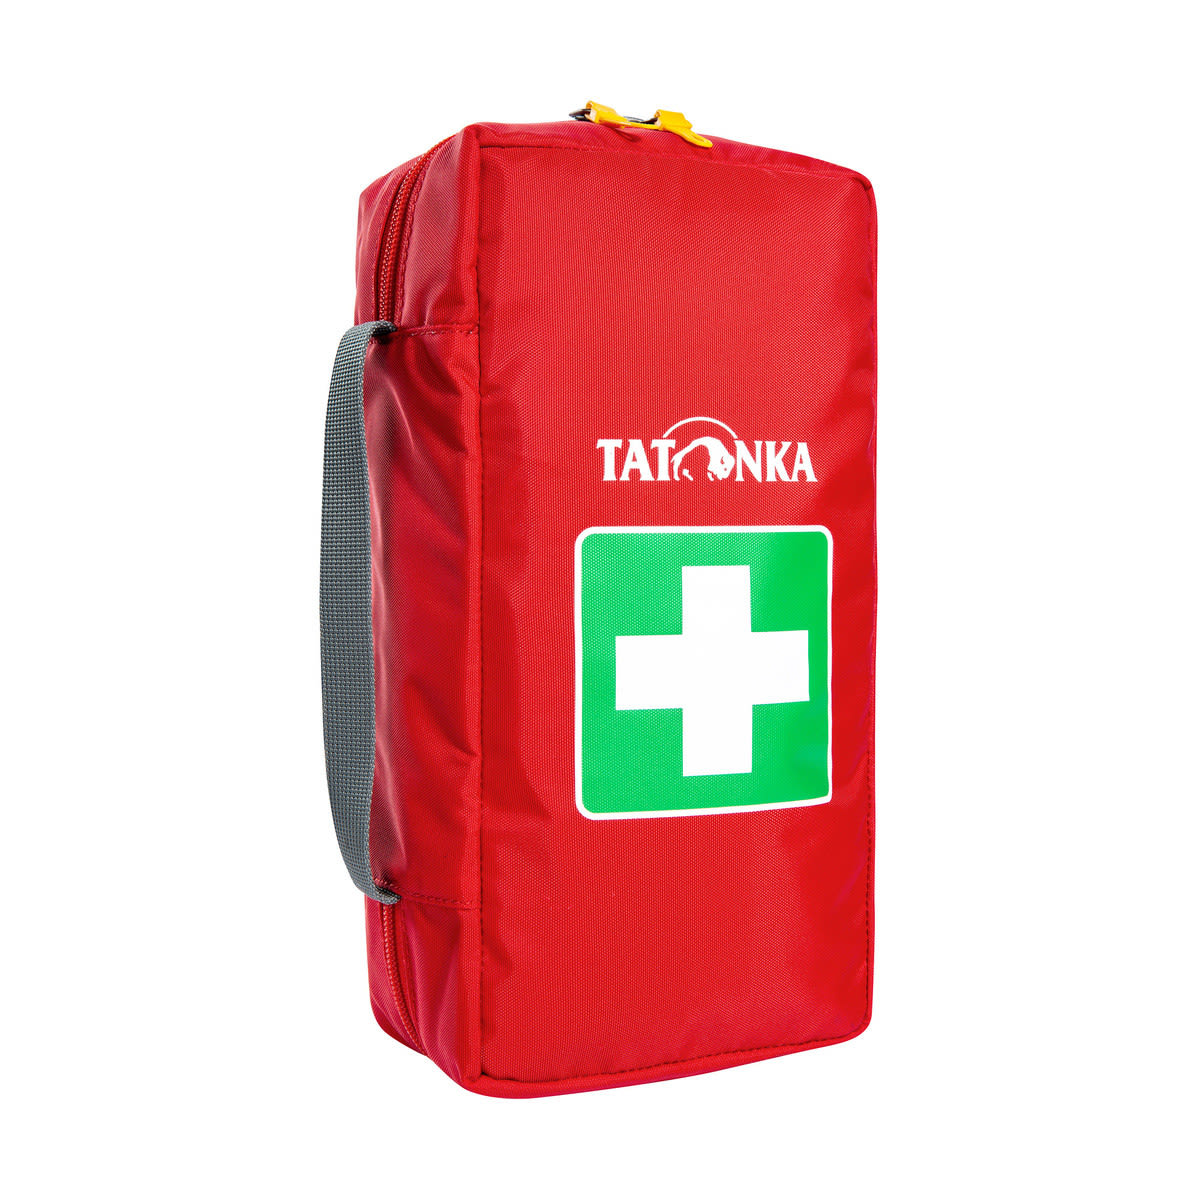 Tatonka First AID Rot- Erste Hilfe und Notfallausrstung- Grsse One Size - Farbe Red unter Tatonka